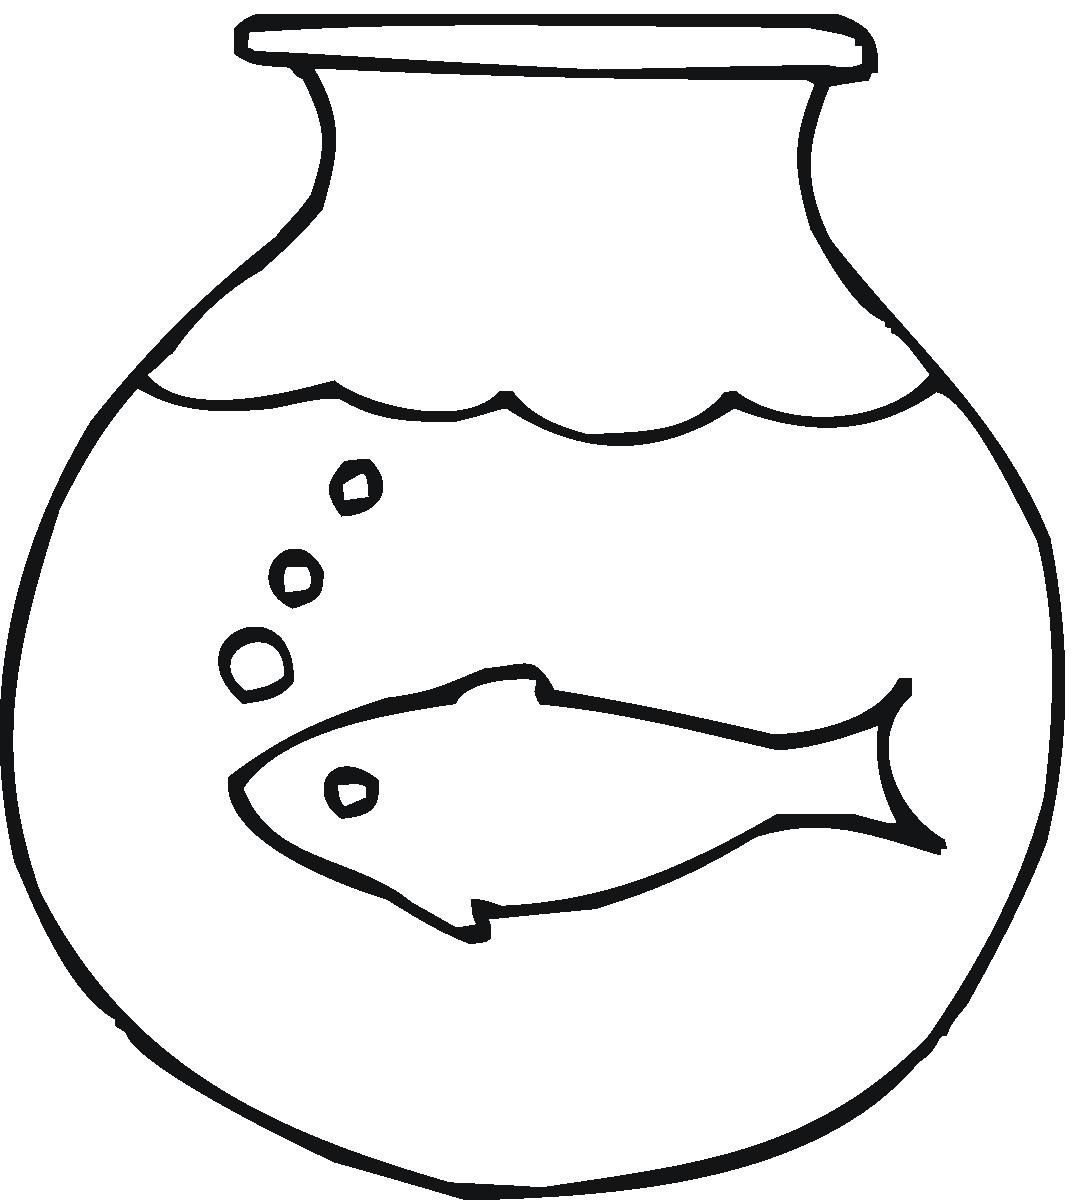 Fish bowl clip art clipart image